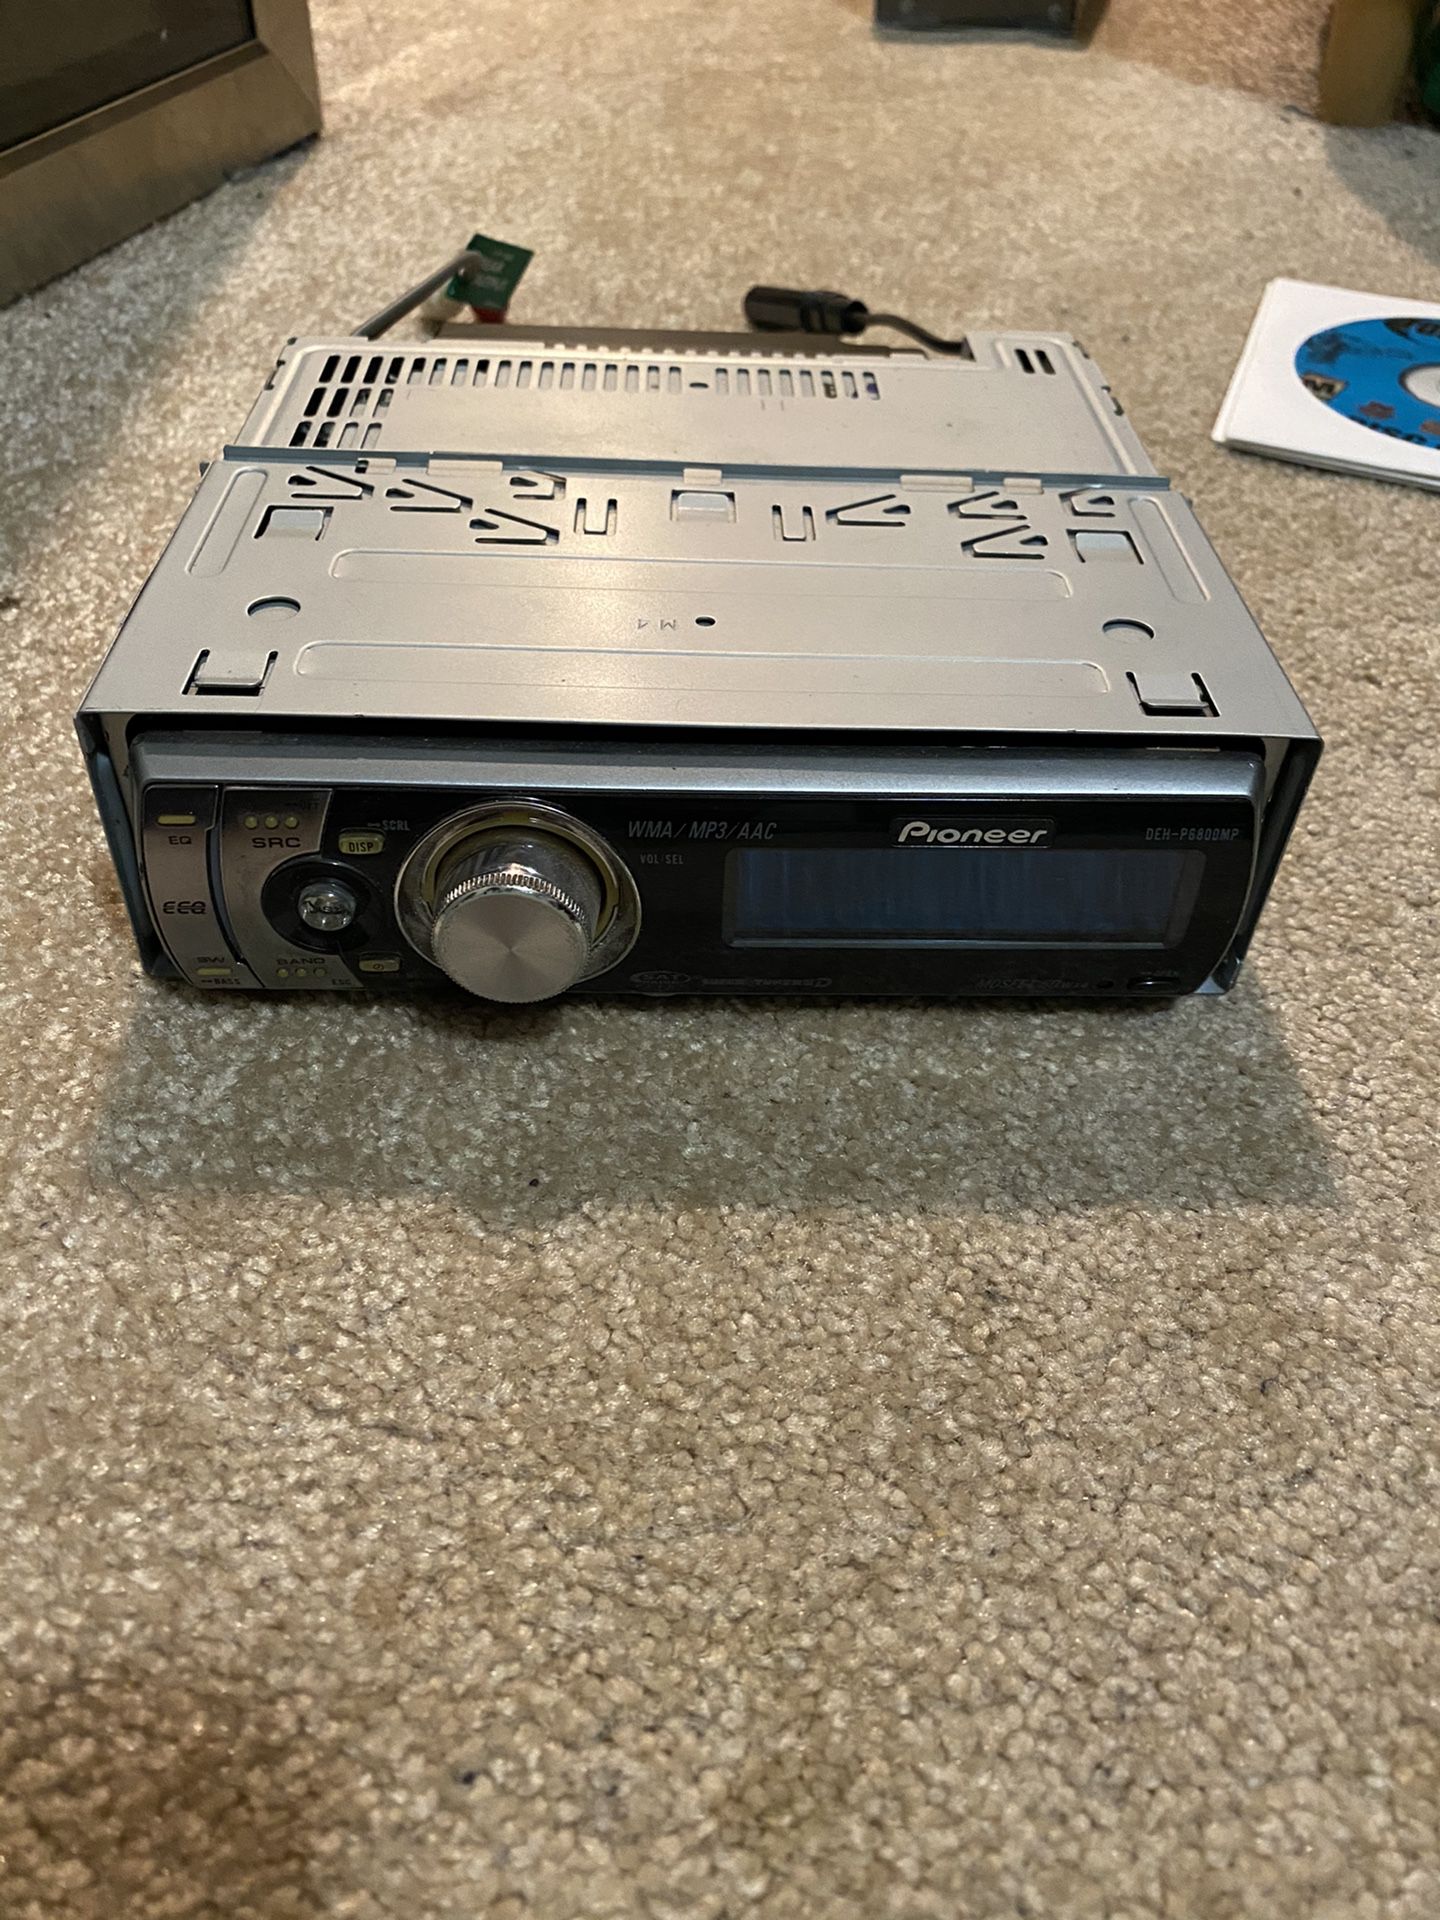 Pioneer Deh-P6800mp car stereo Radio CD Player in dash receiver unit mp3 super tuner